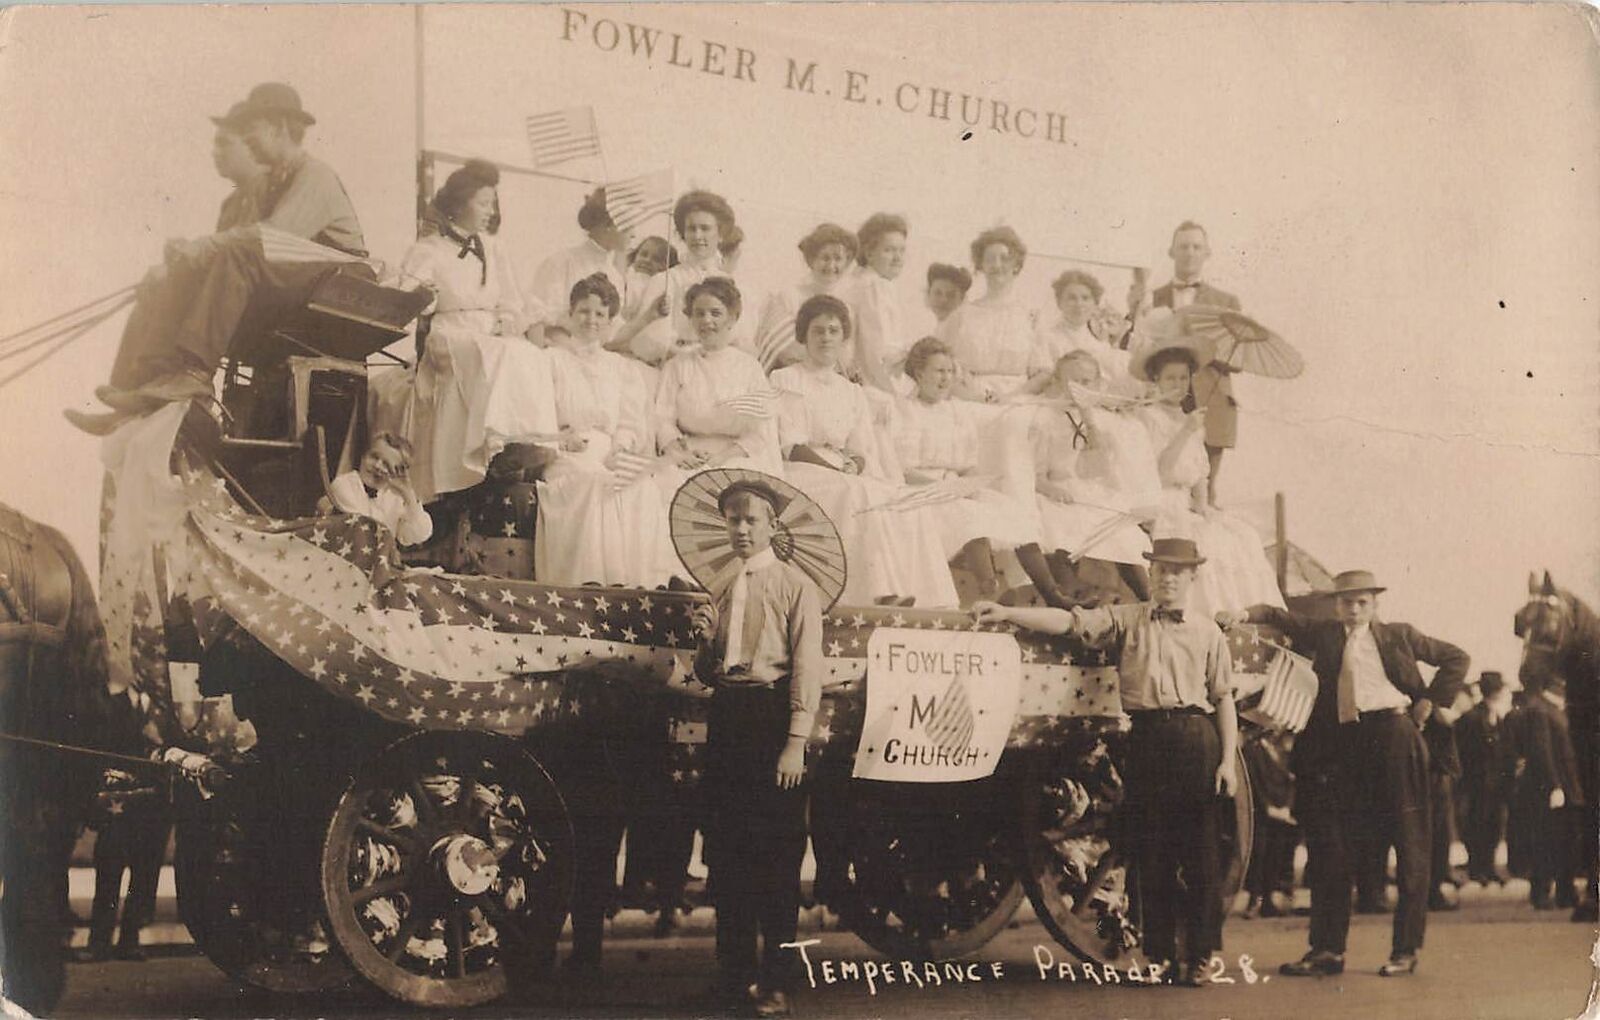 1910s Temperance Parade Wagon RPPC Fowler Adams County Illinois M.E. Church rare